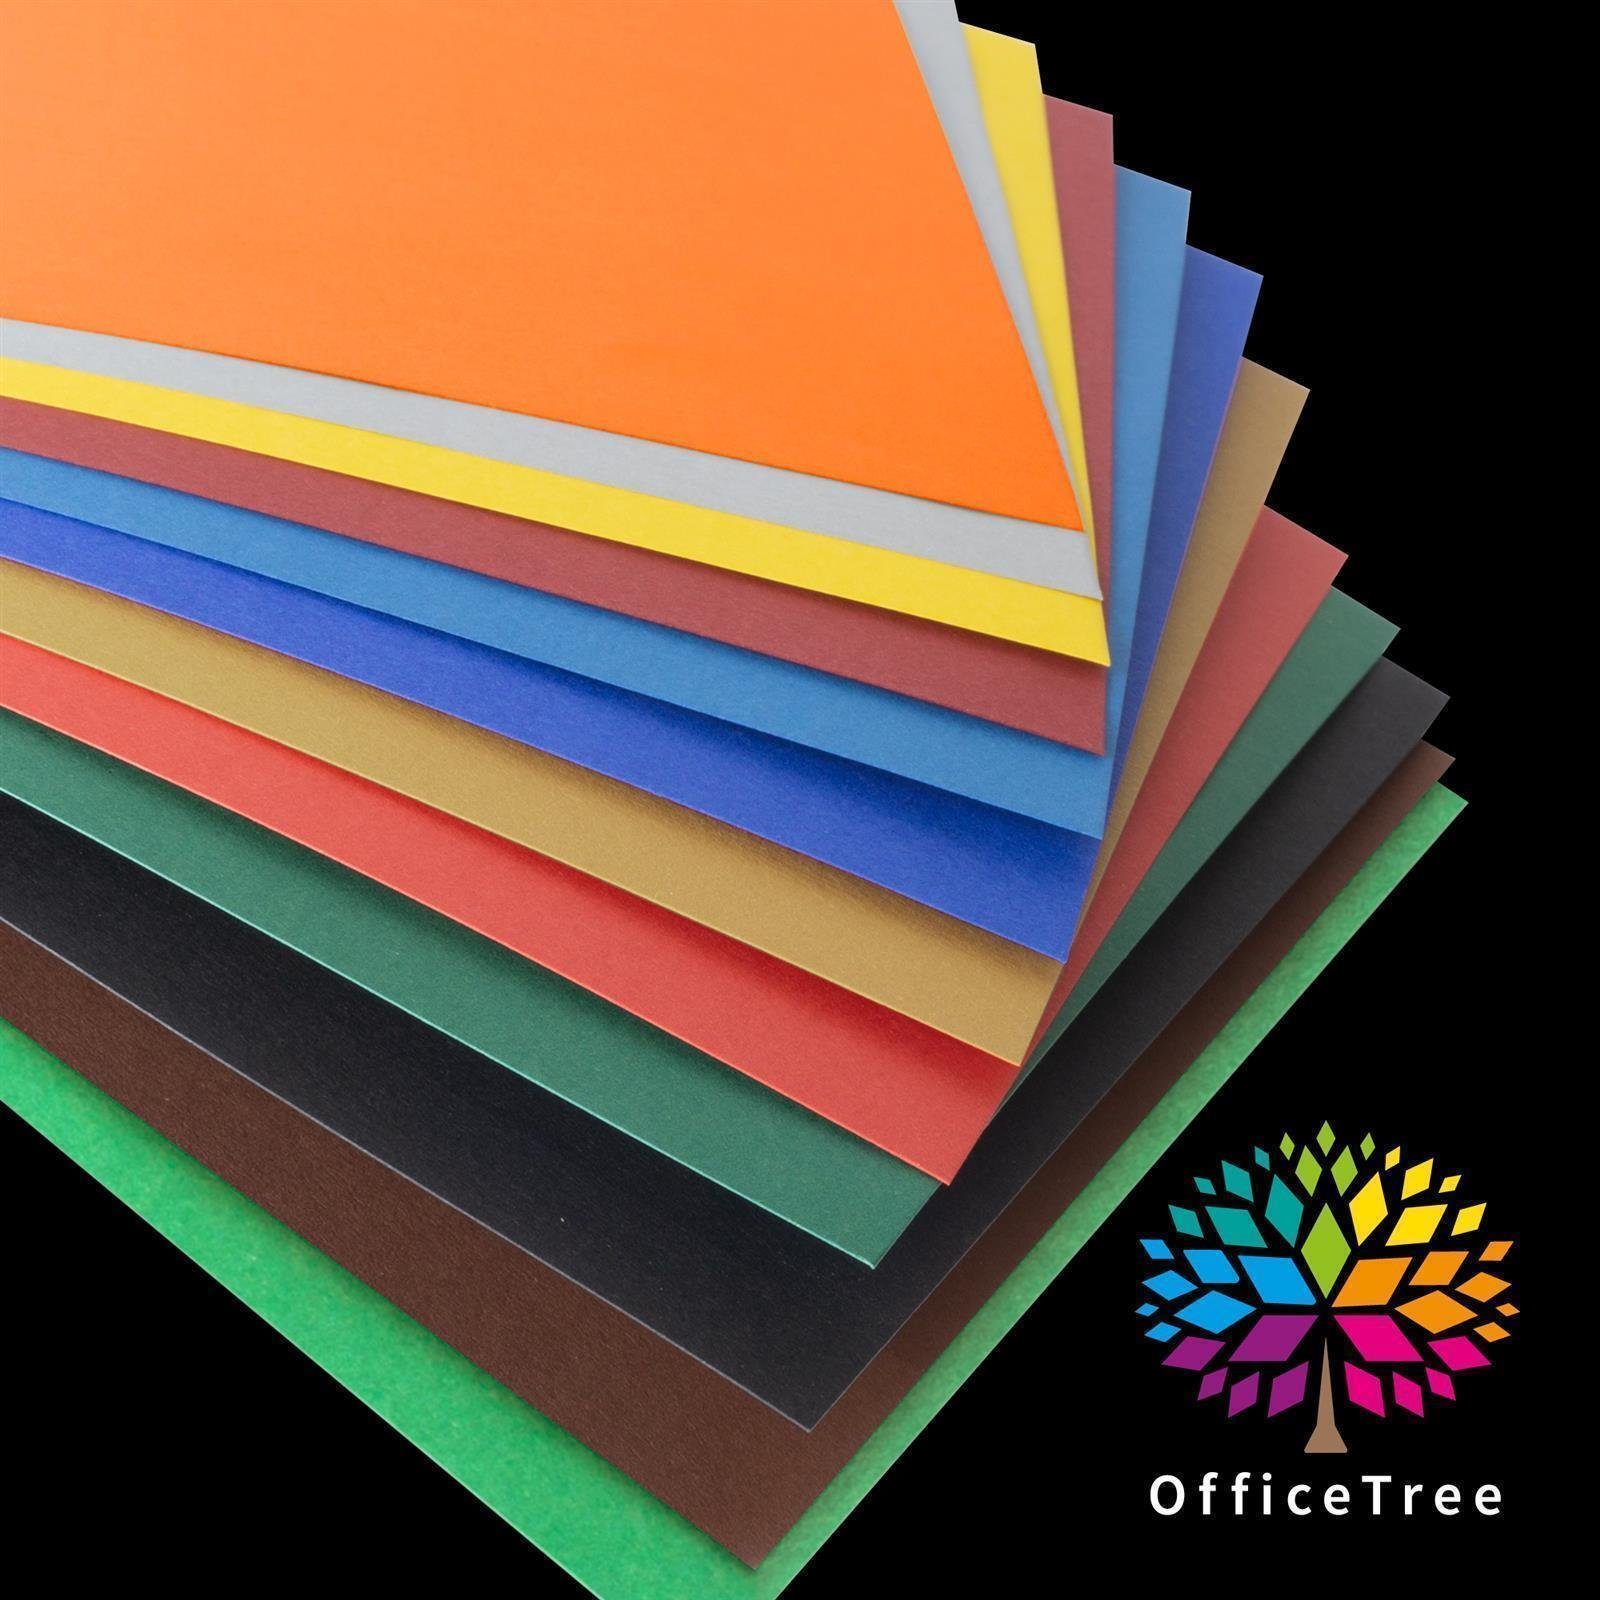 OfficeTree Transparentpapier 104 130g/m Tonpapier Bastelpapier Basteln Gestalten zum Blatt und A4 bunt